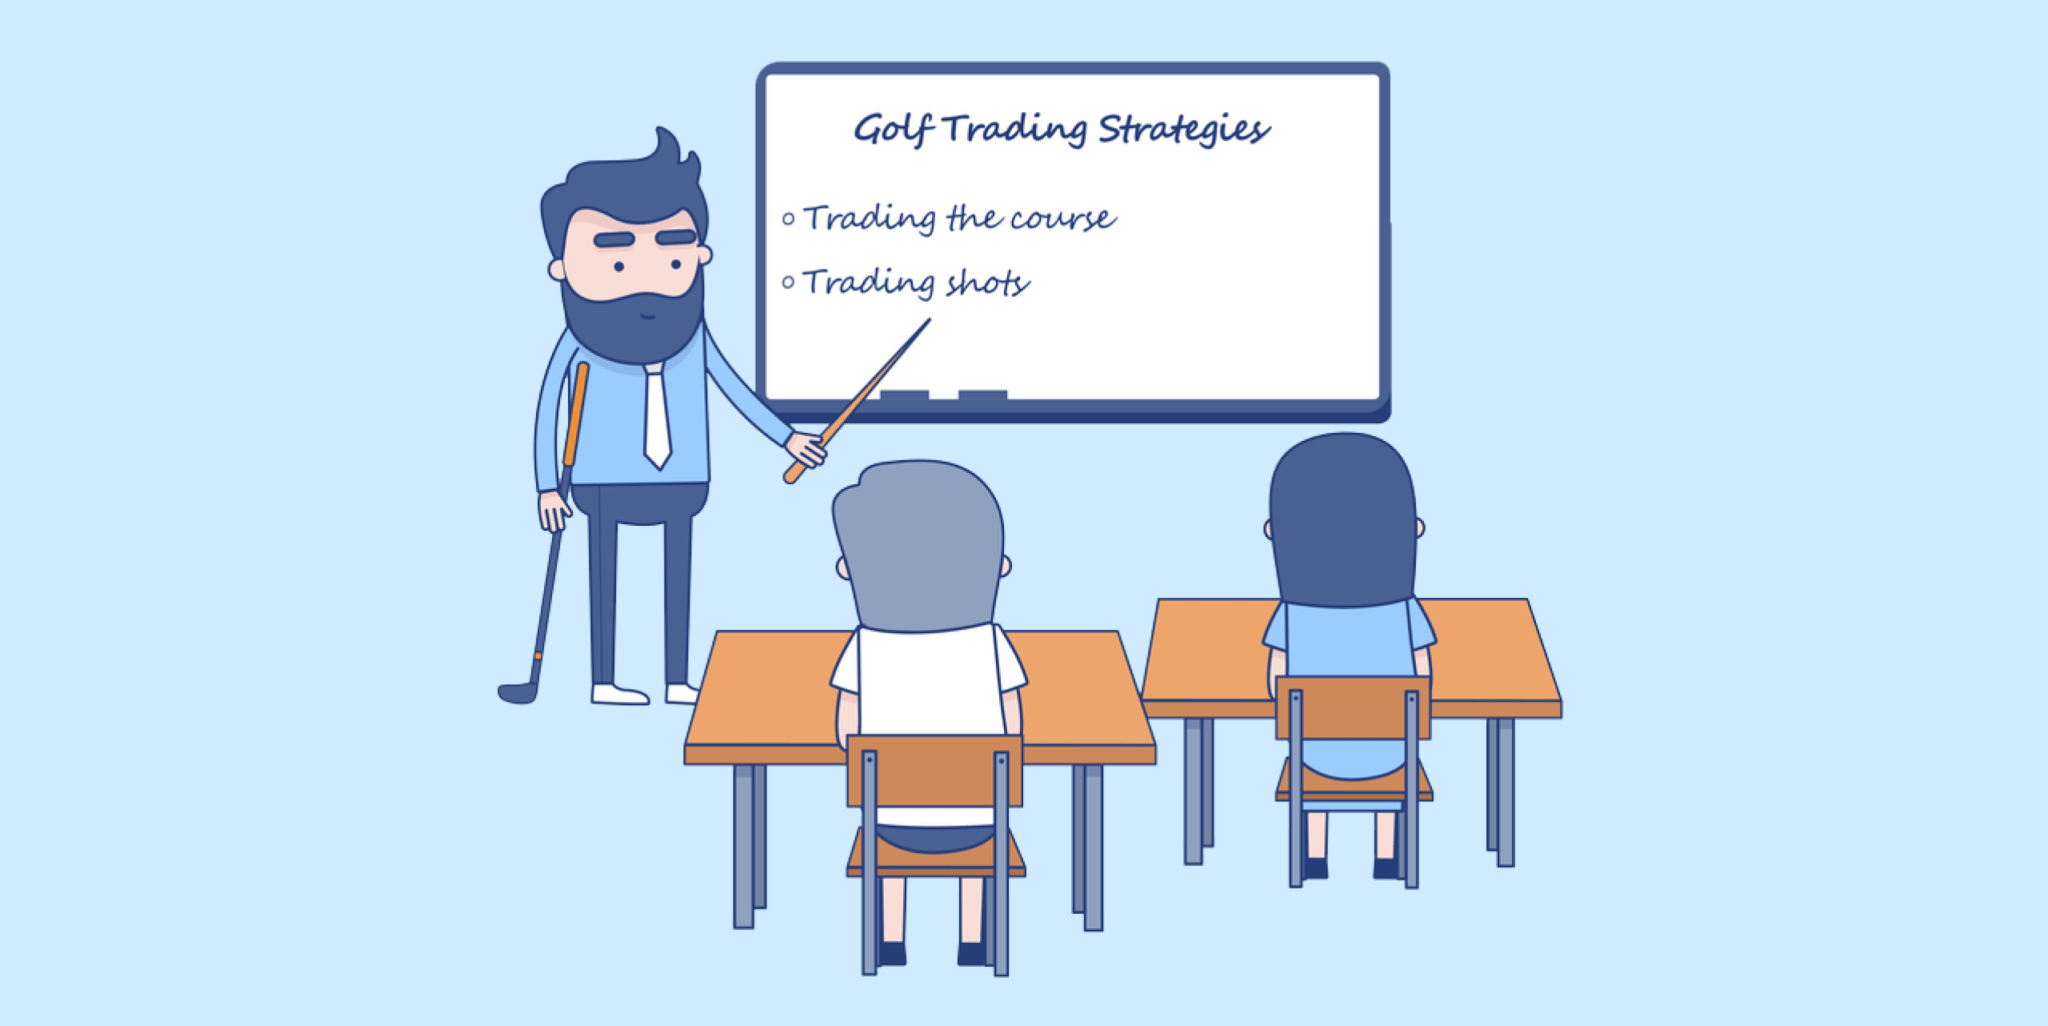 Golf trading strategies